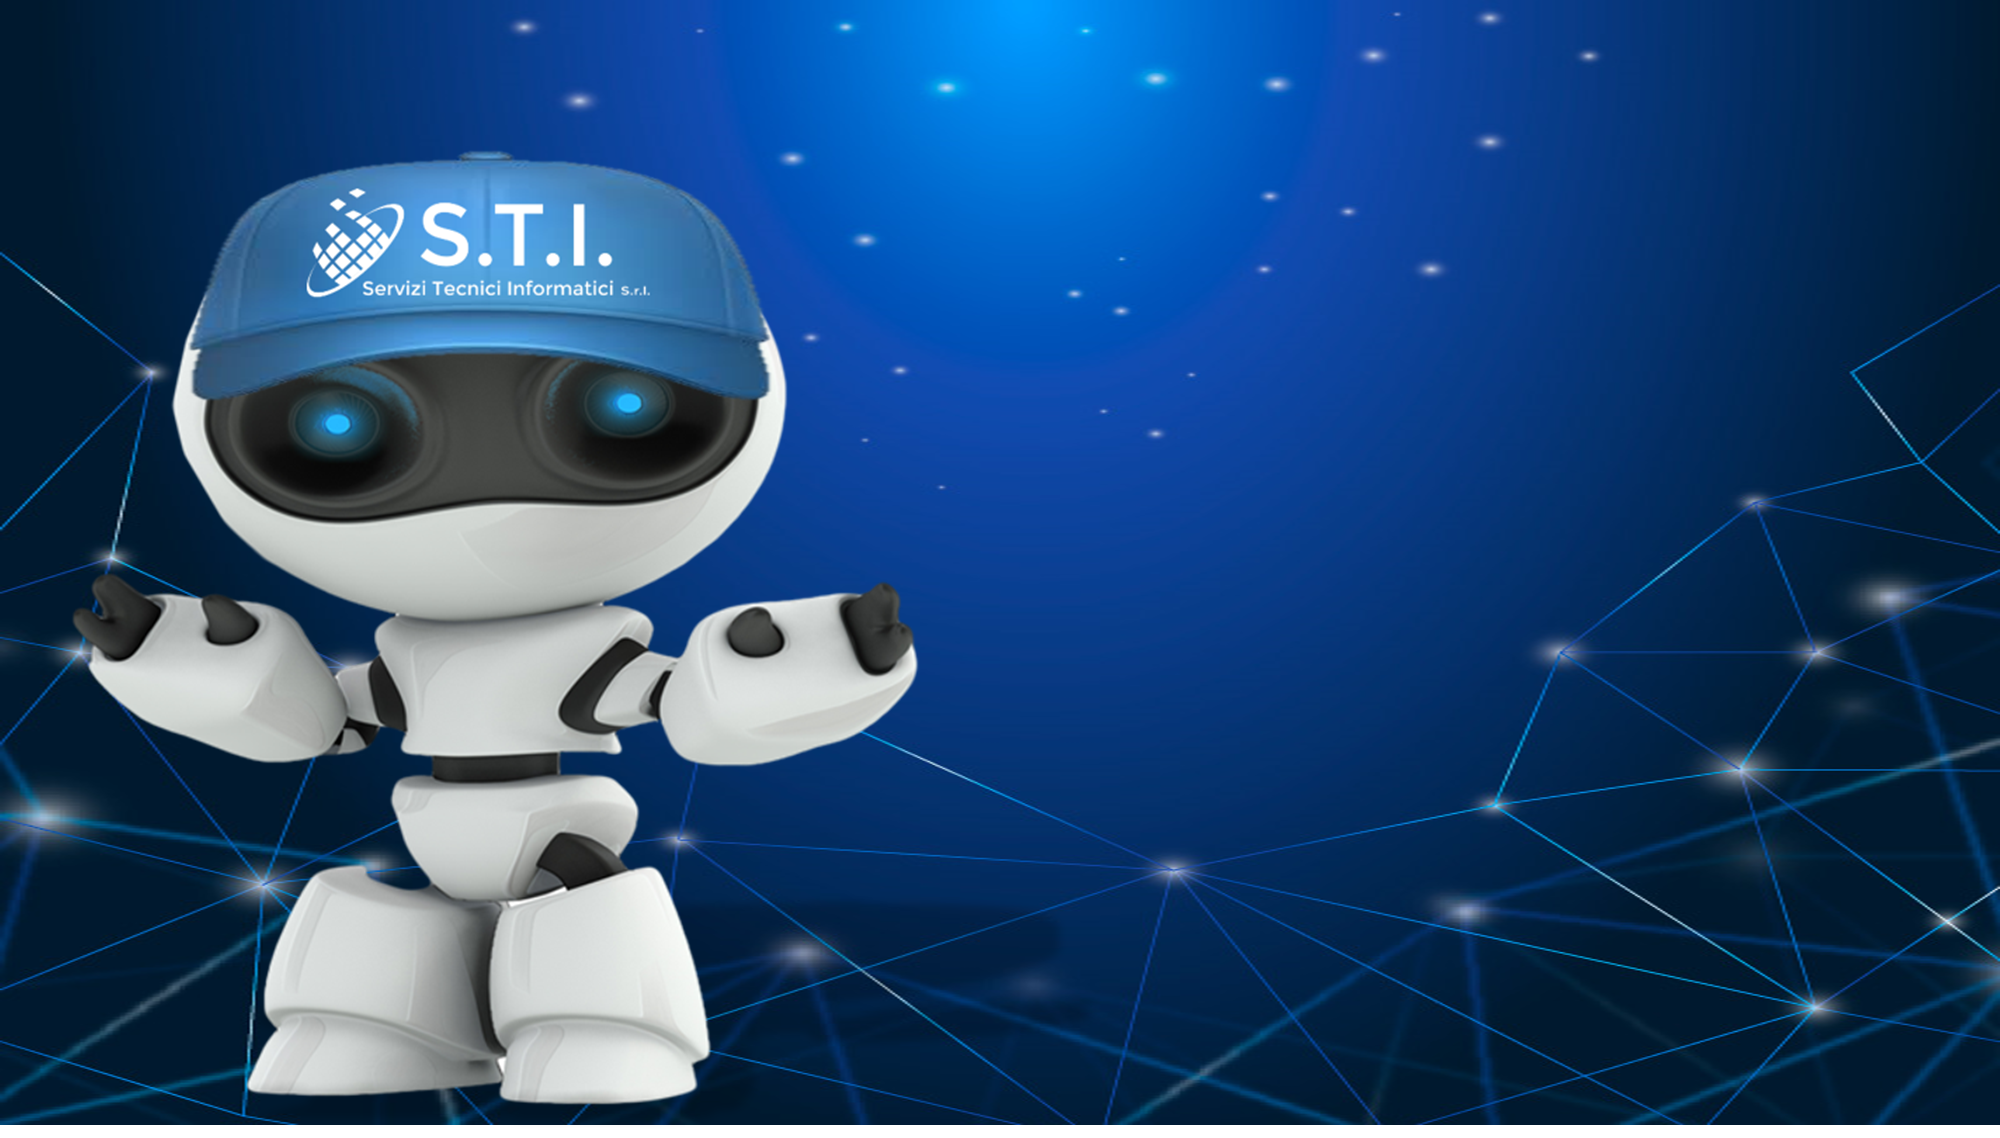 ITS - Il chatbot di S.T.I.